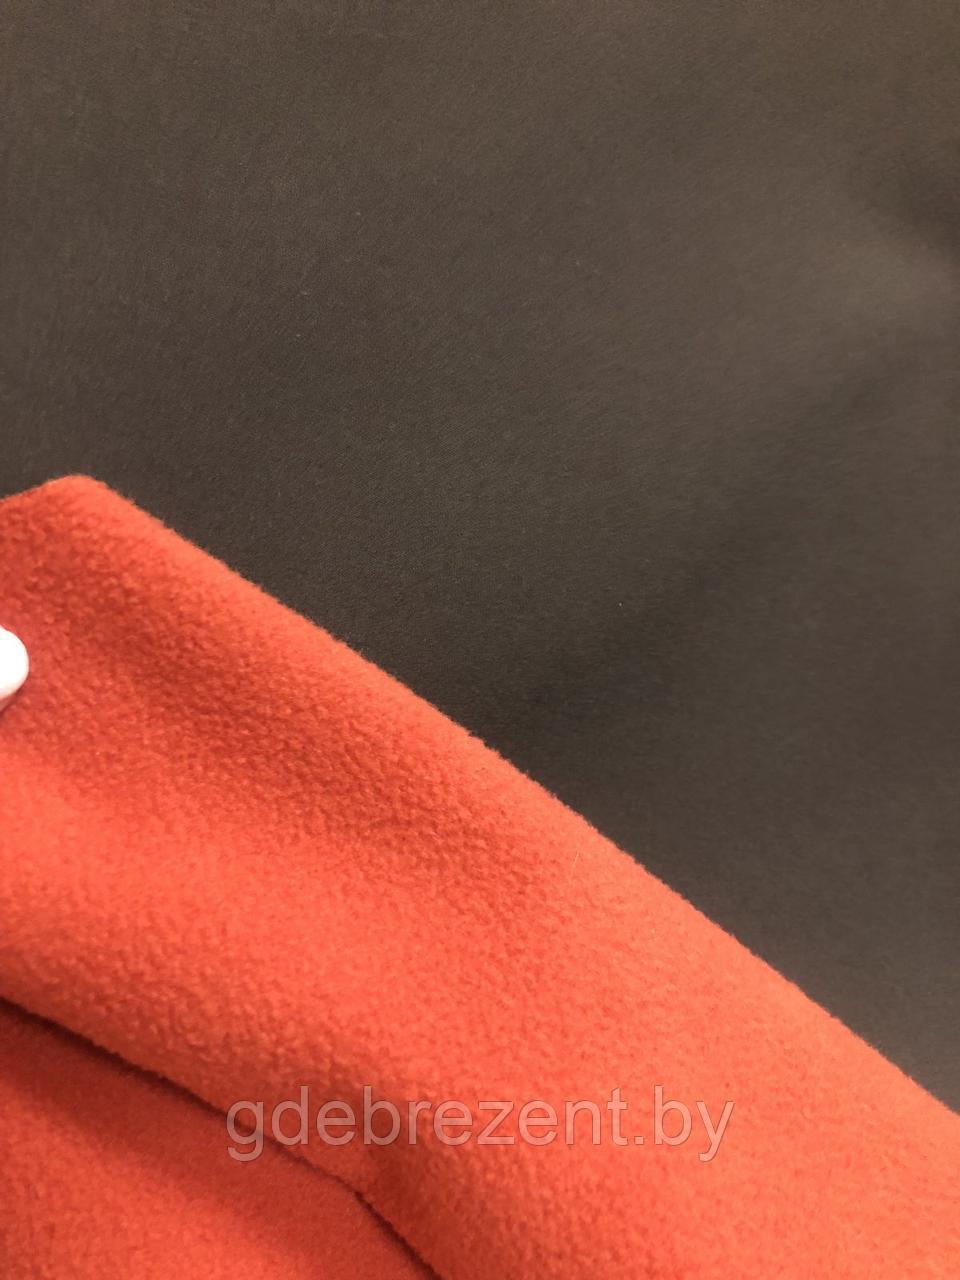 Ткань курточная Софтшел ультра (оранжевый)